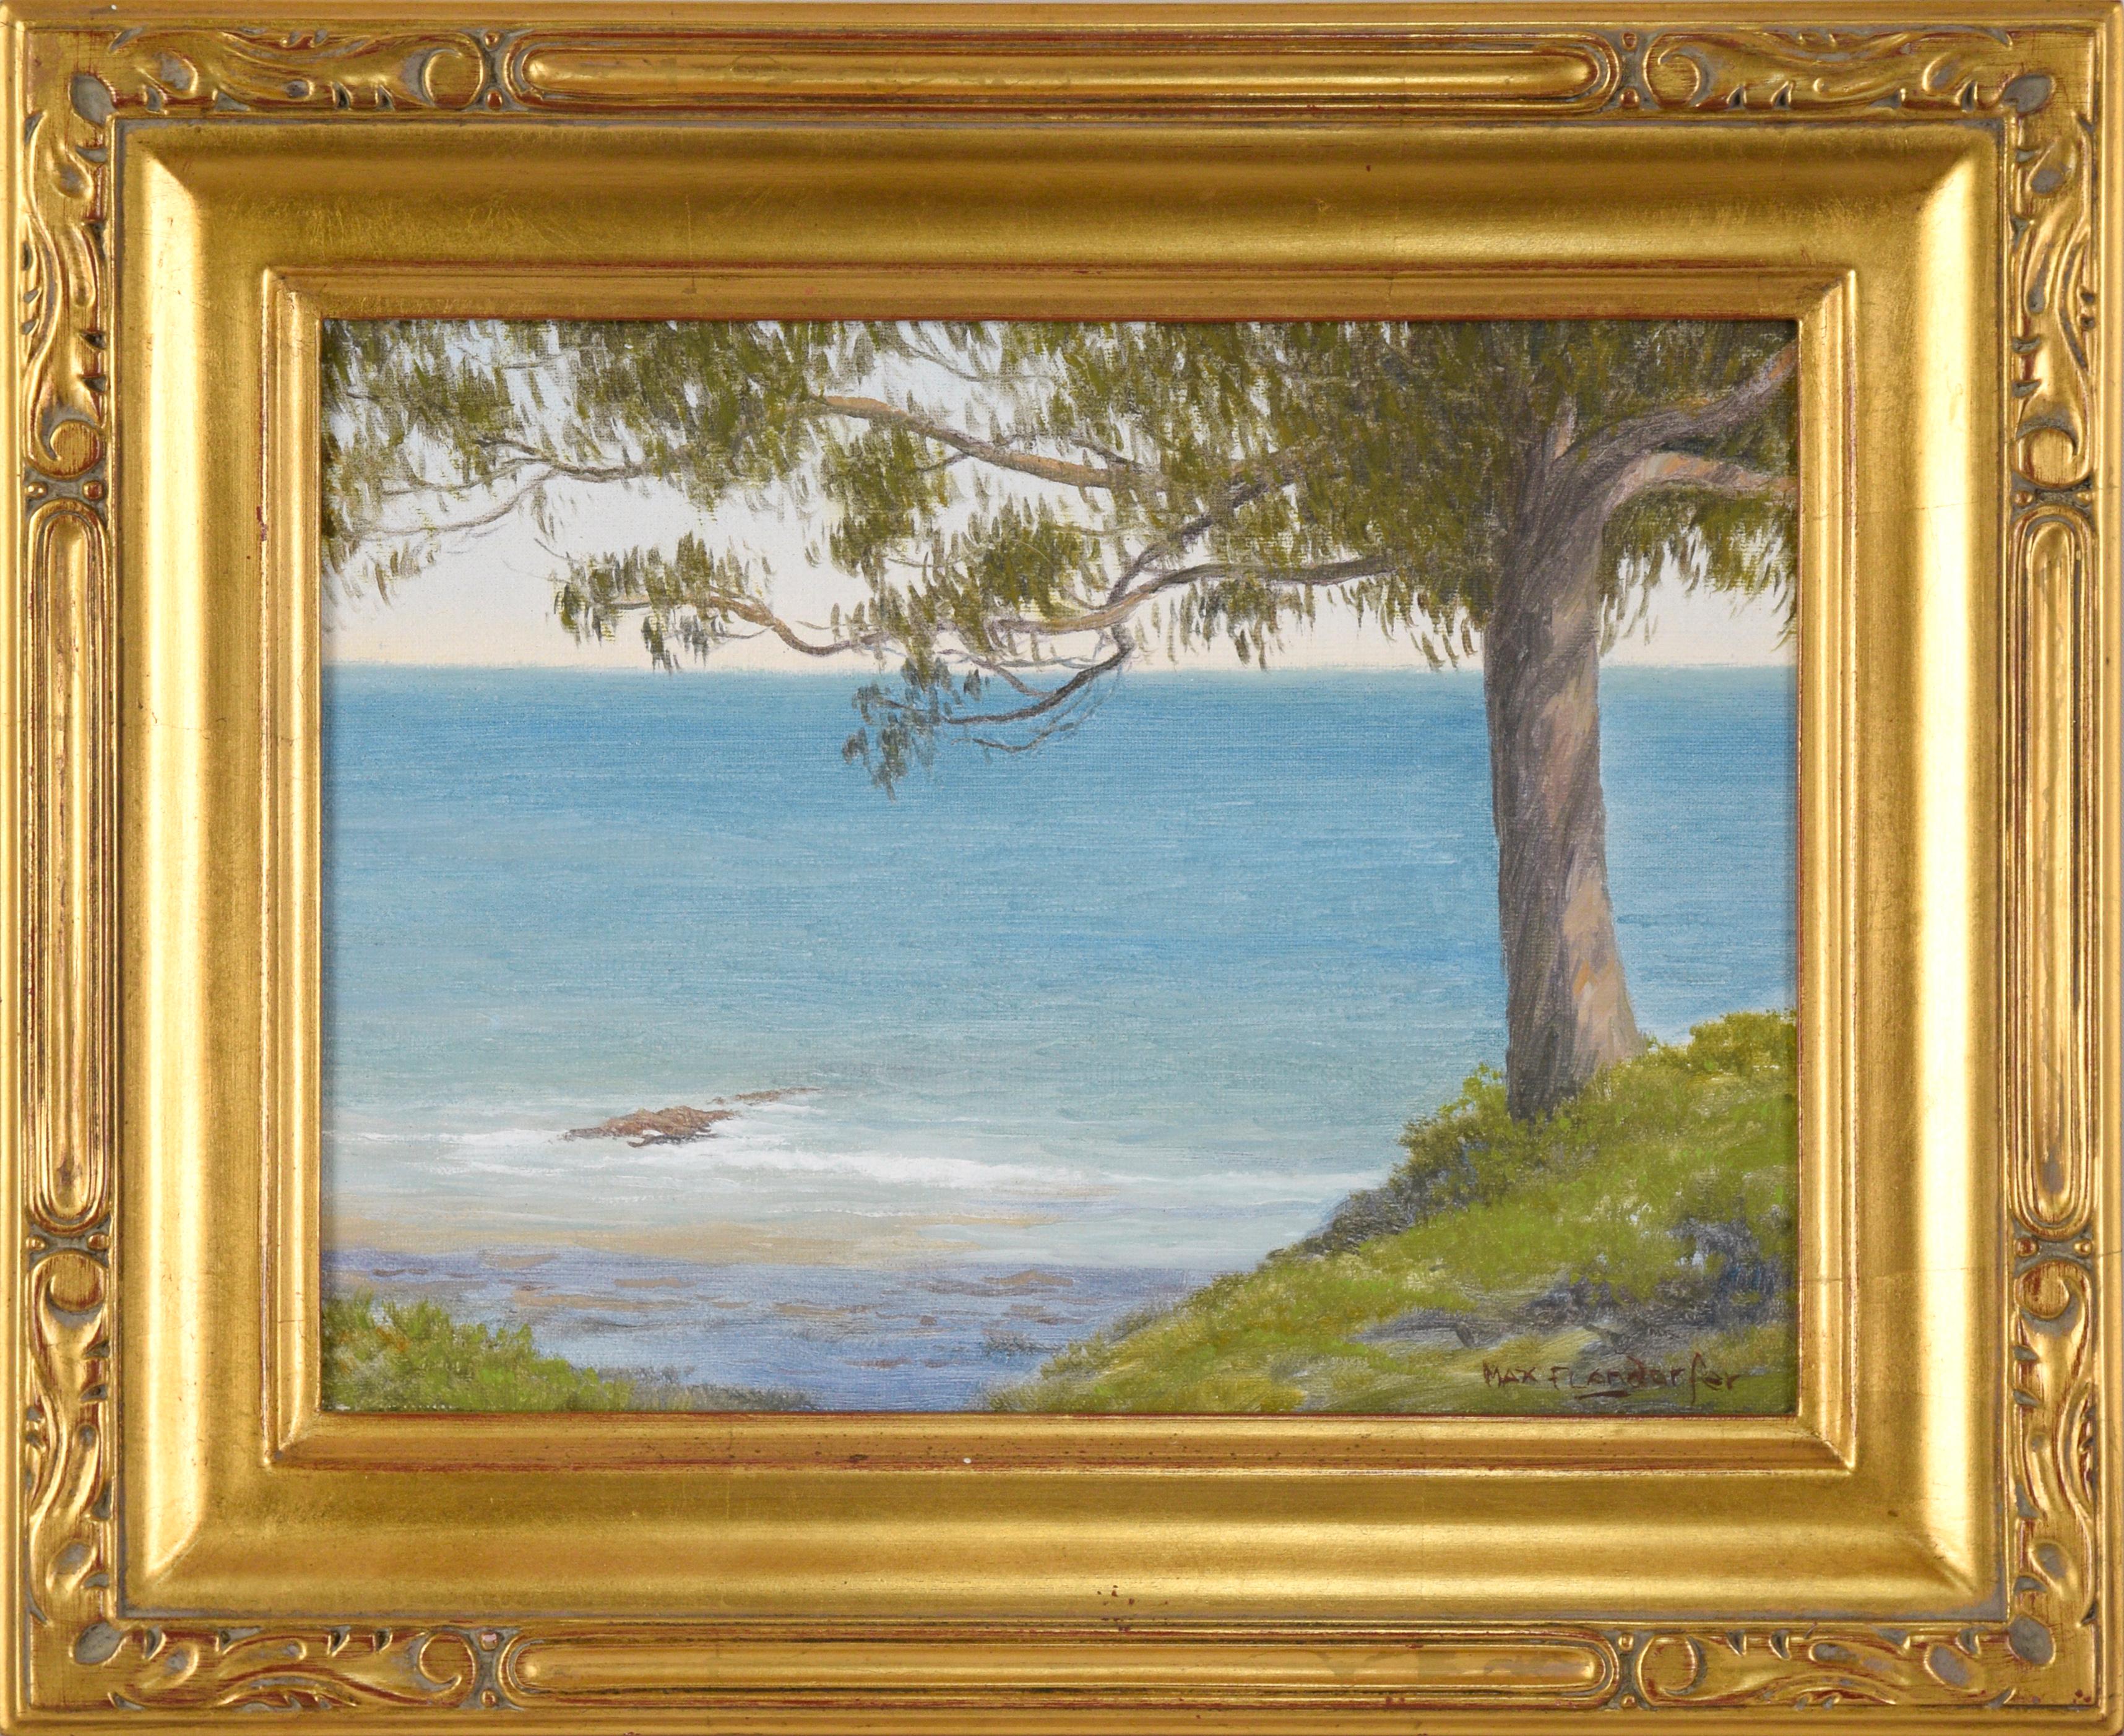 Max Flandorfer Landscape Painting - "West Cliff, Santa Cruz" Coastal Landscape in Oil on Linen